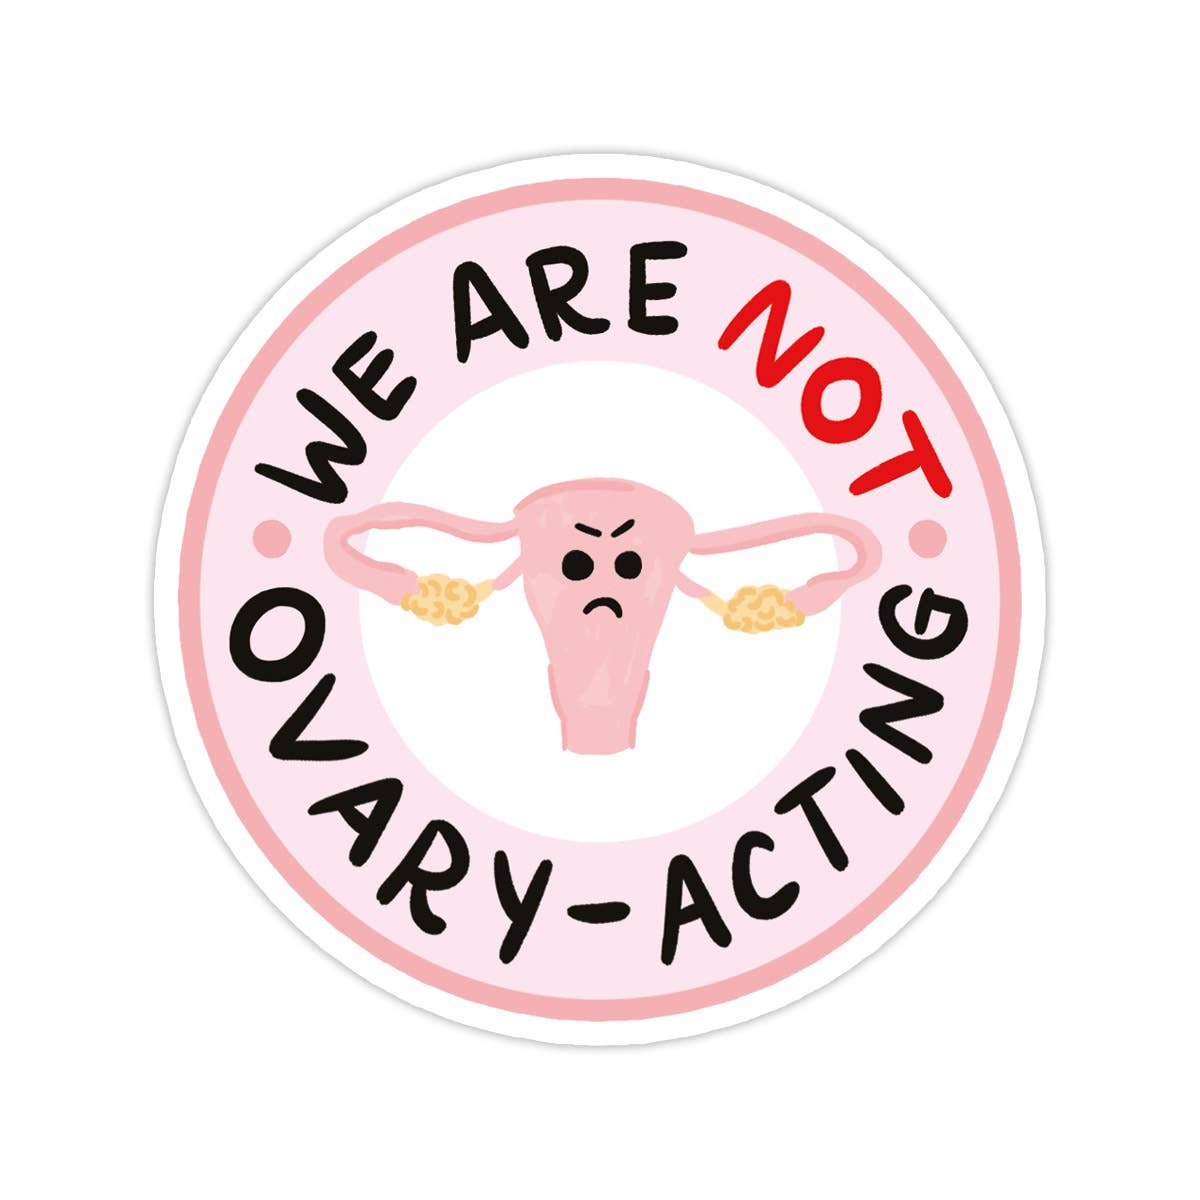 Ovary-acting Sticker - Spiral Circle